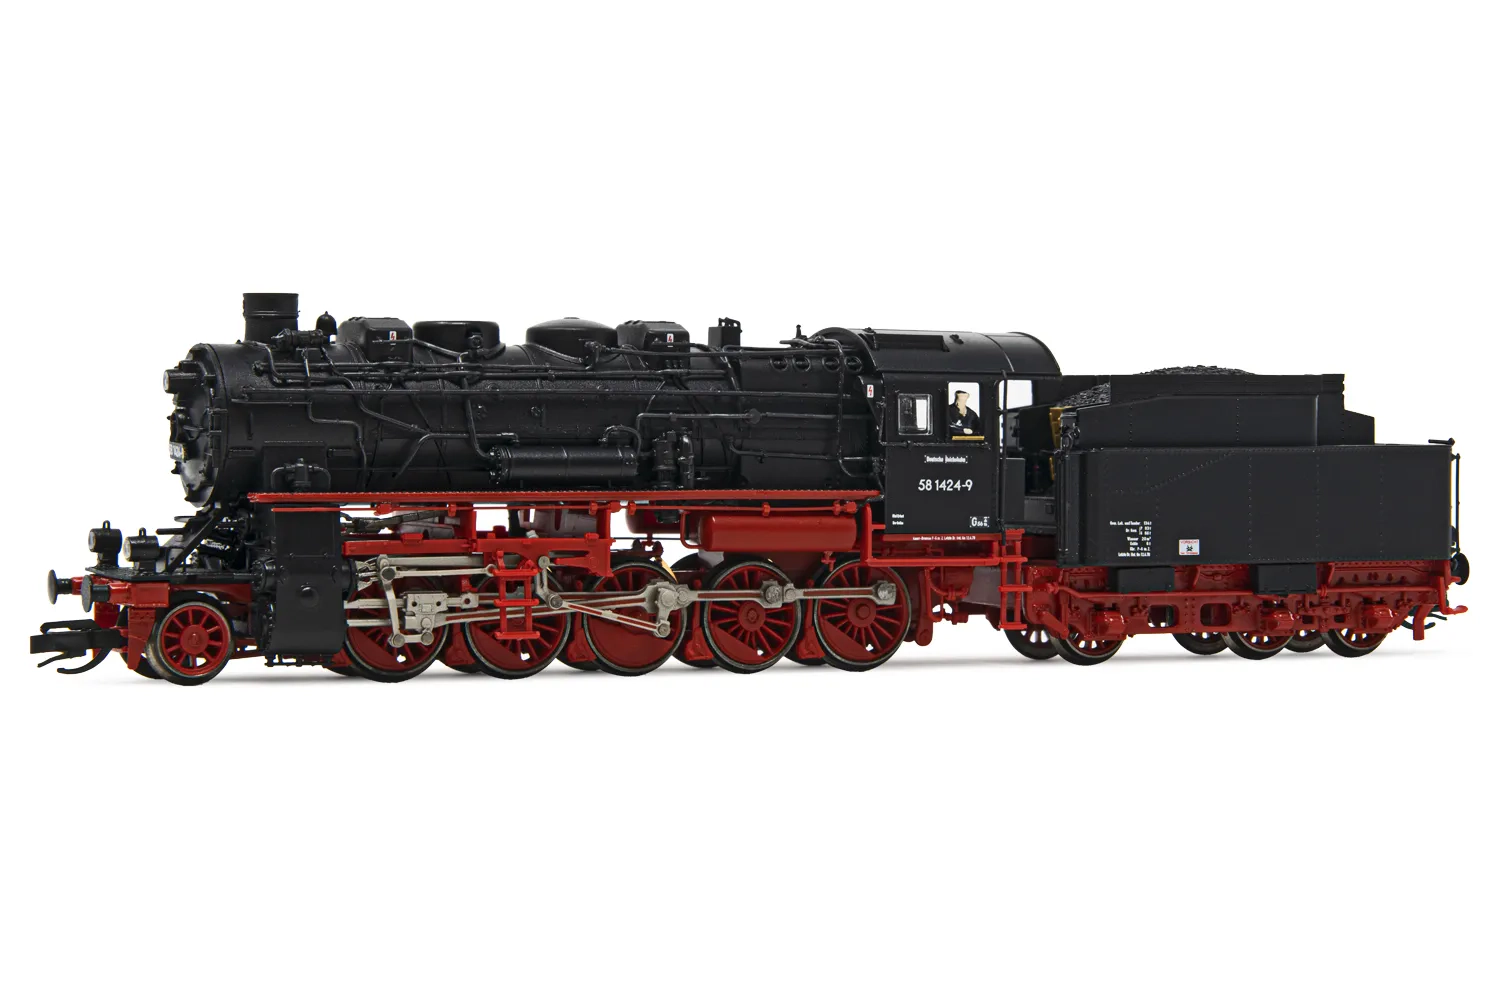 DR, locomotiva a vapore classe 58 1424-9 con 4 duomi, livrea rossa/nera, ep. IV